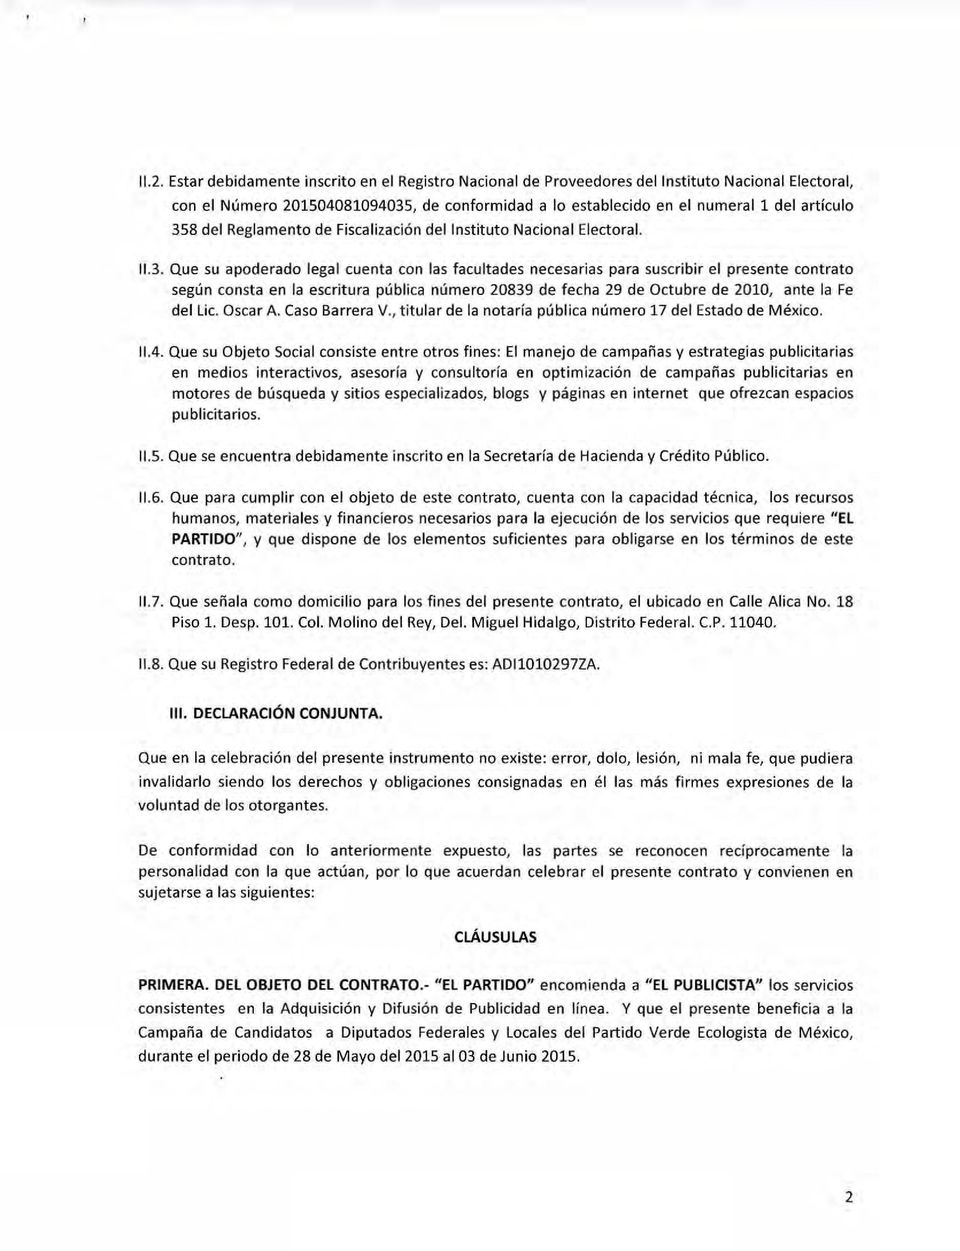 Oscar A. Caso Barrera V., titular de la notaría pública número 17 del Estado de México. 11.4.